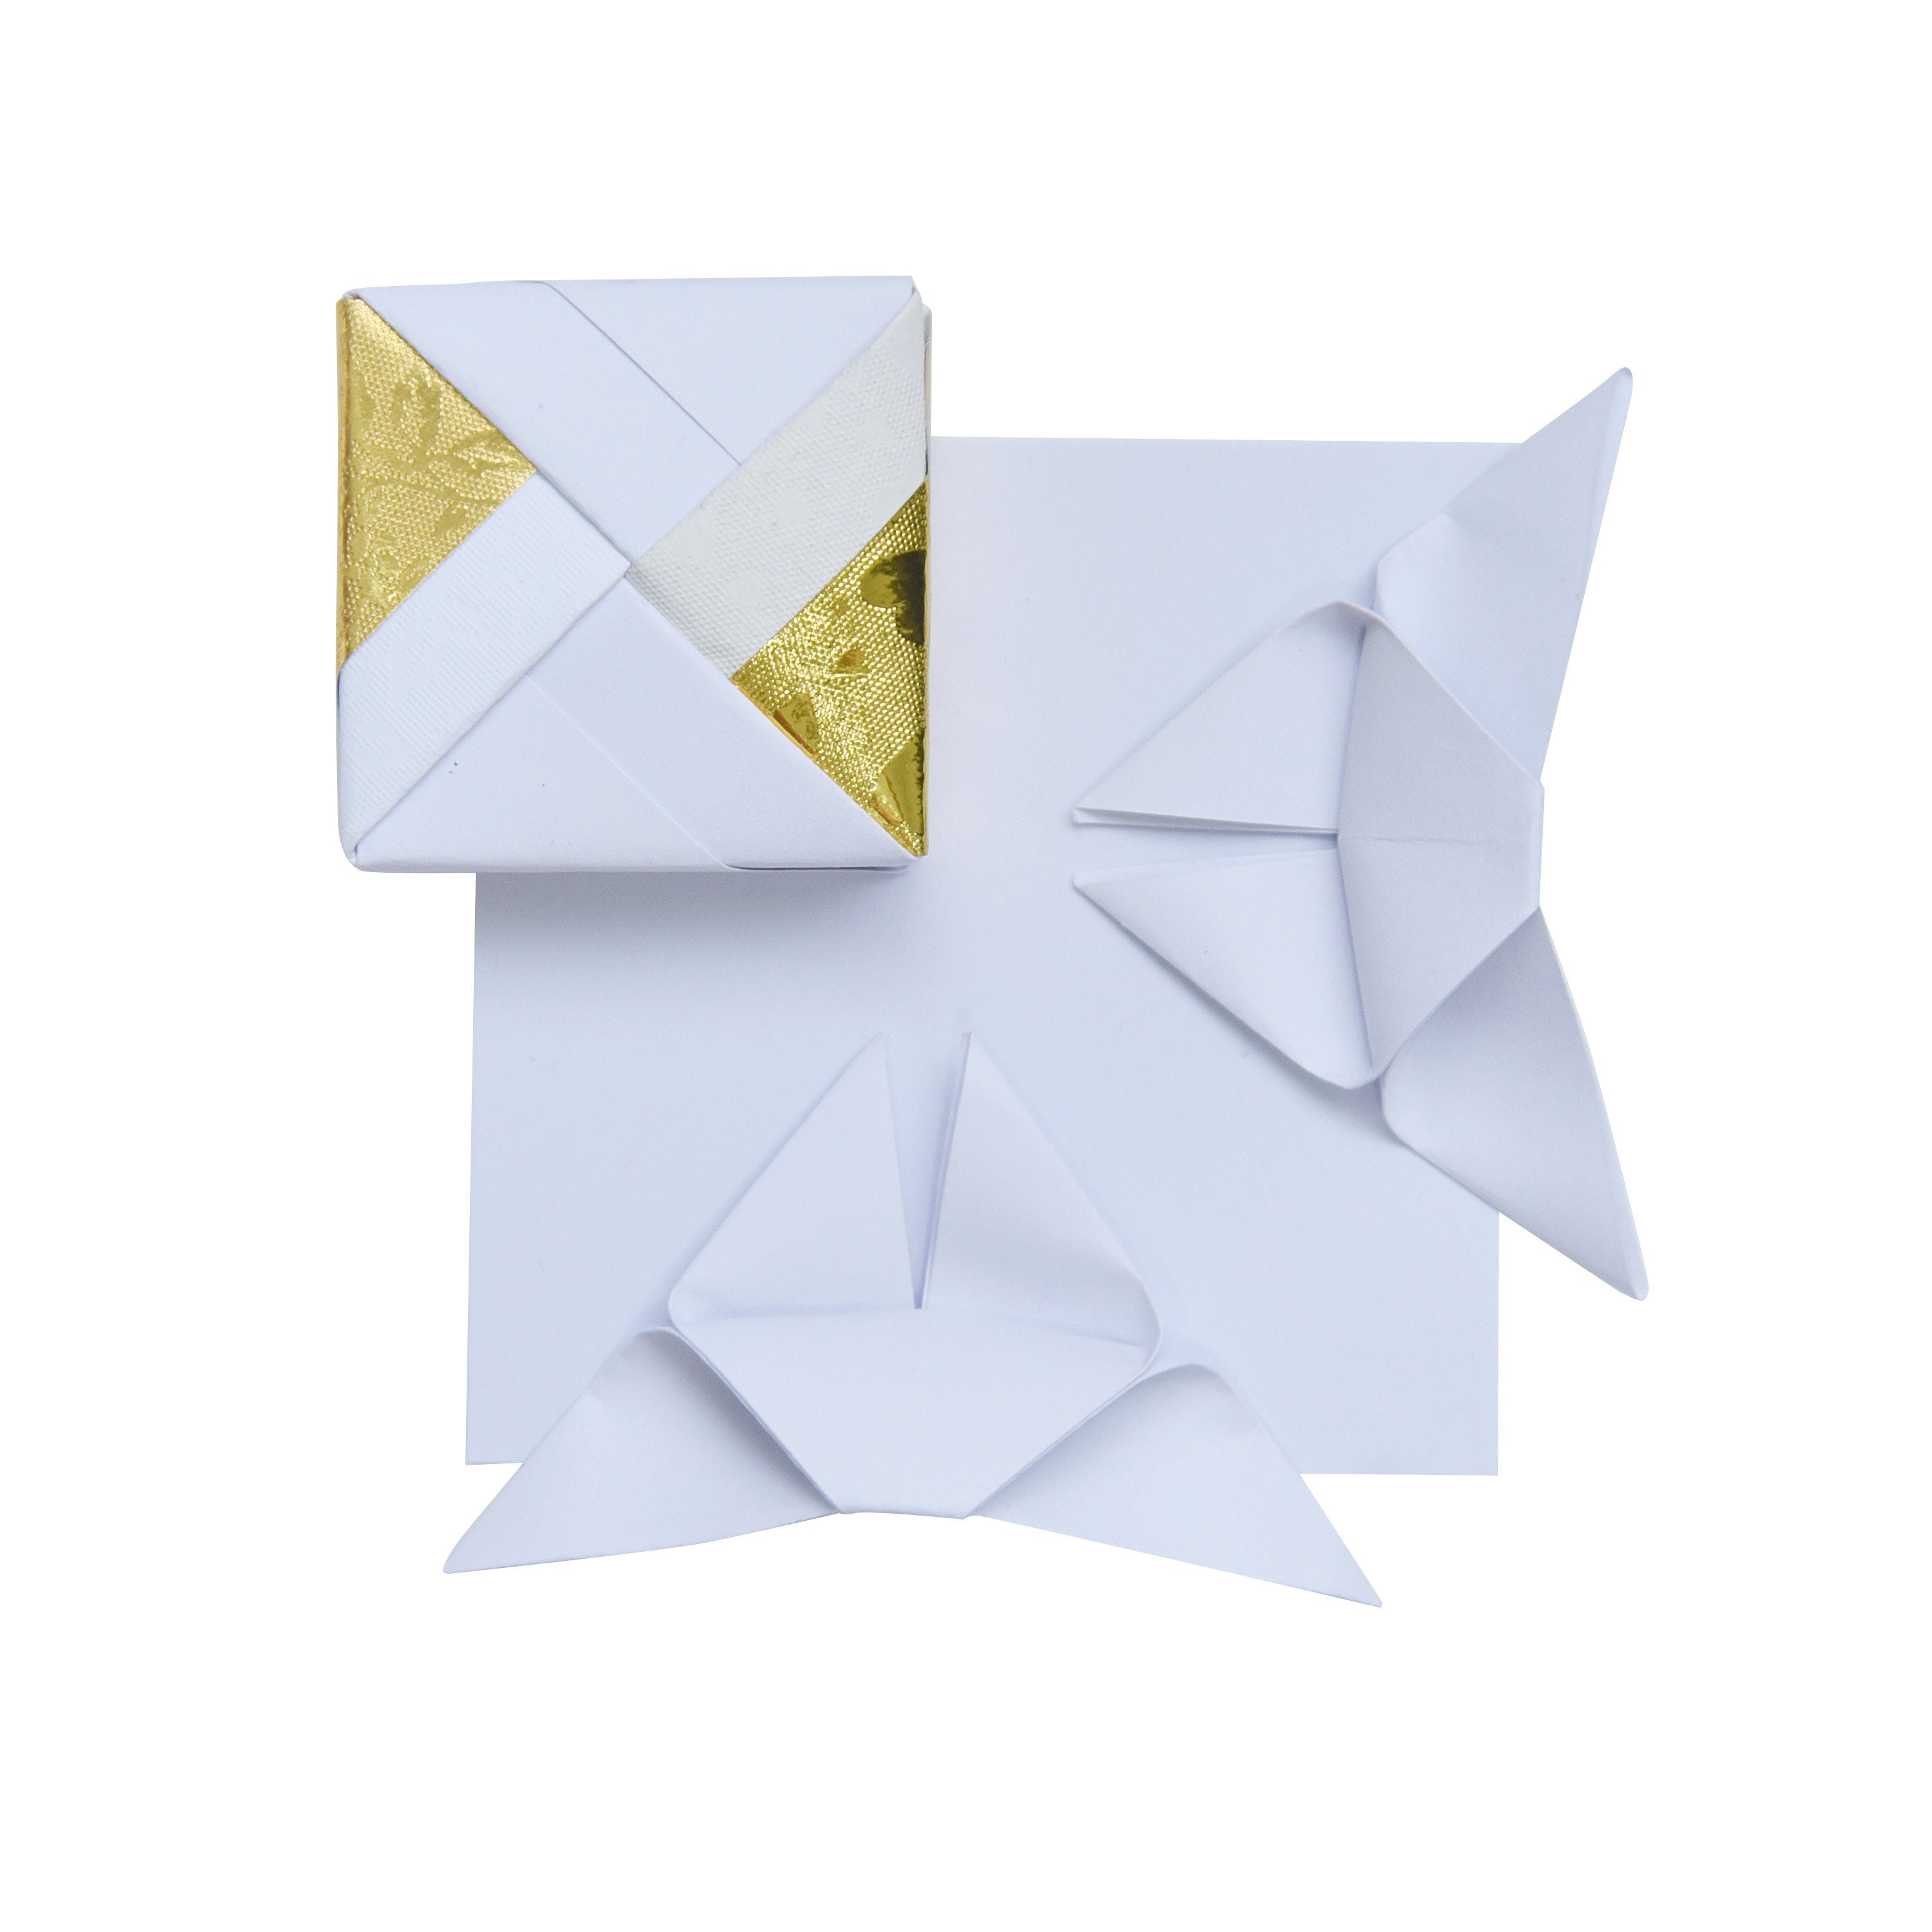 100 fogli di carta origami bianchi - 3x3 pollici - Confezione di carta quadrata per piegare, gru origami e decorazioni